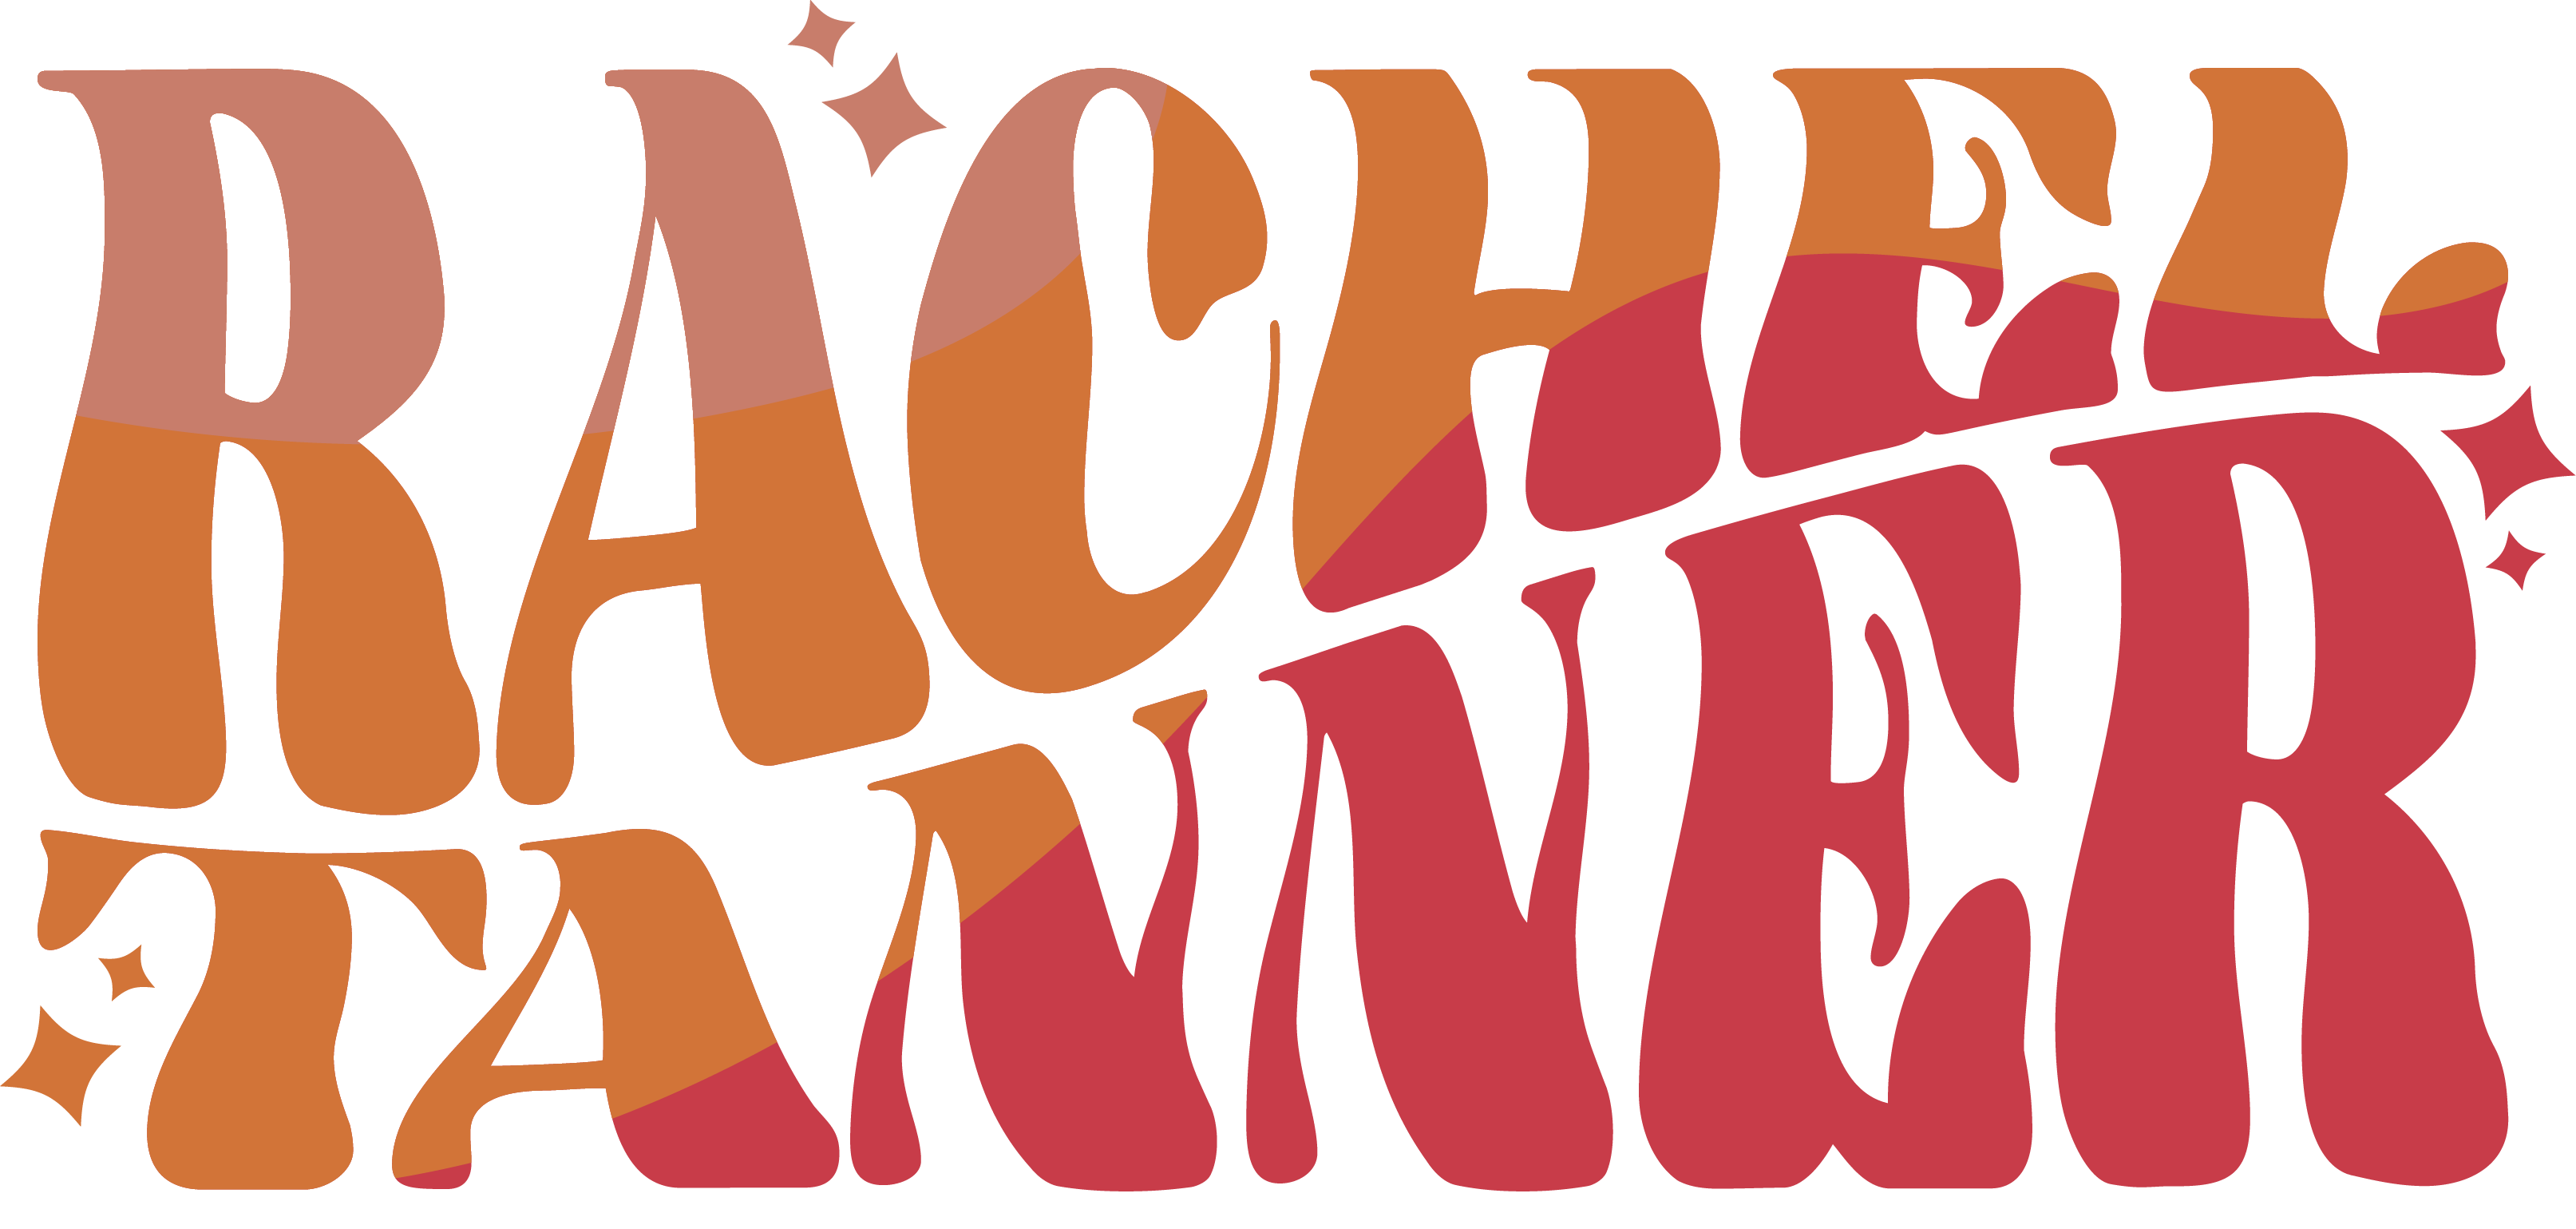 retro font orange magenta and pink Rachel Tanner logo